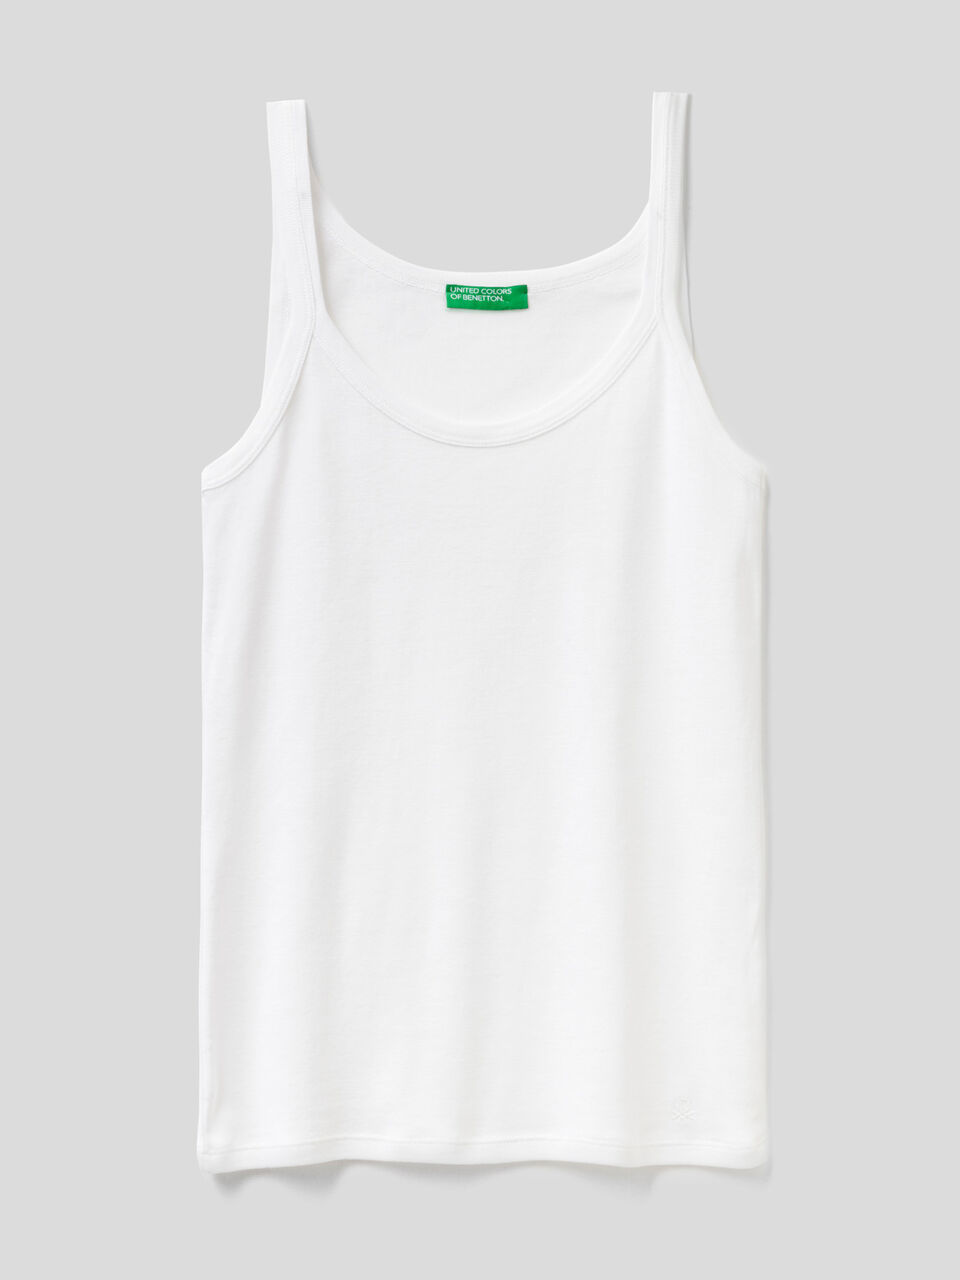 Camiseta blanca de Benetton